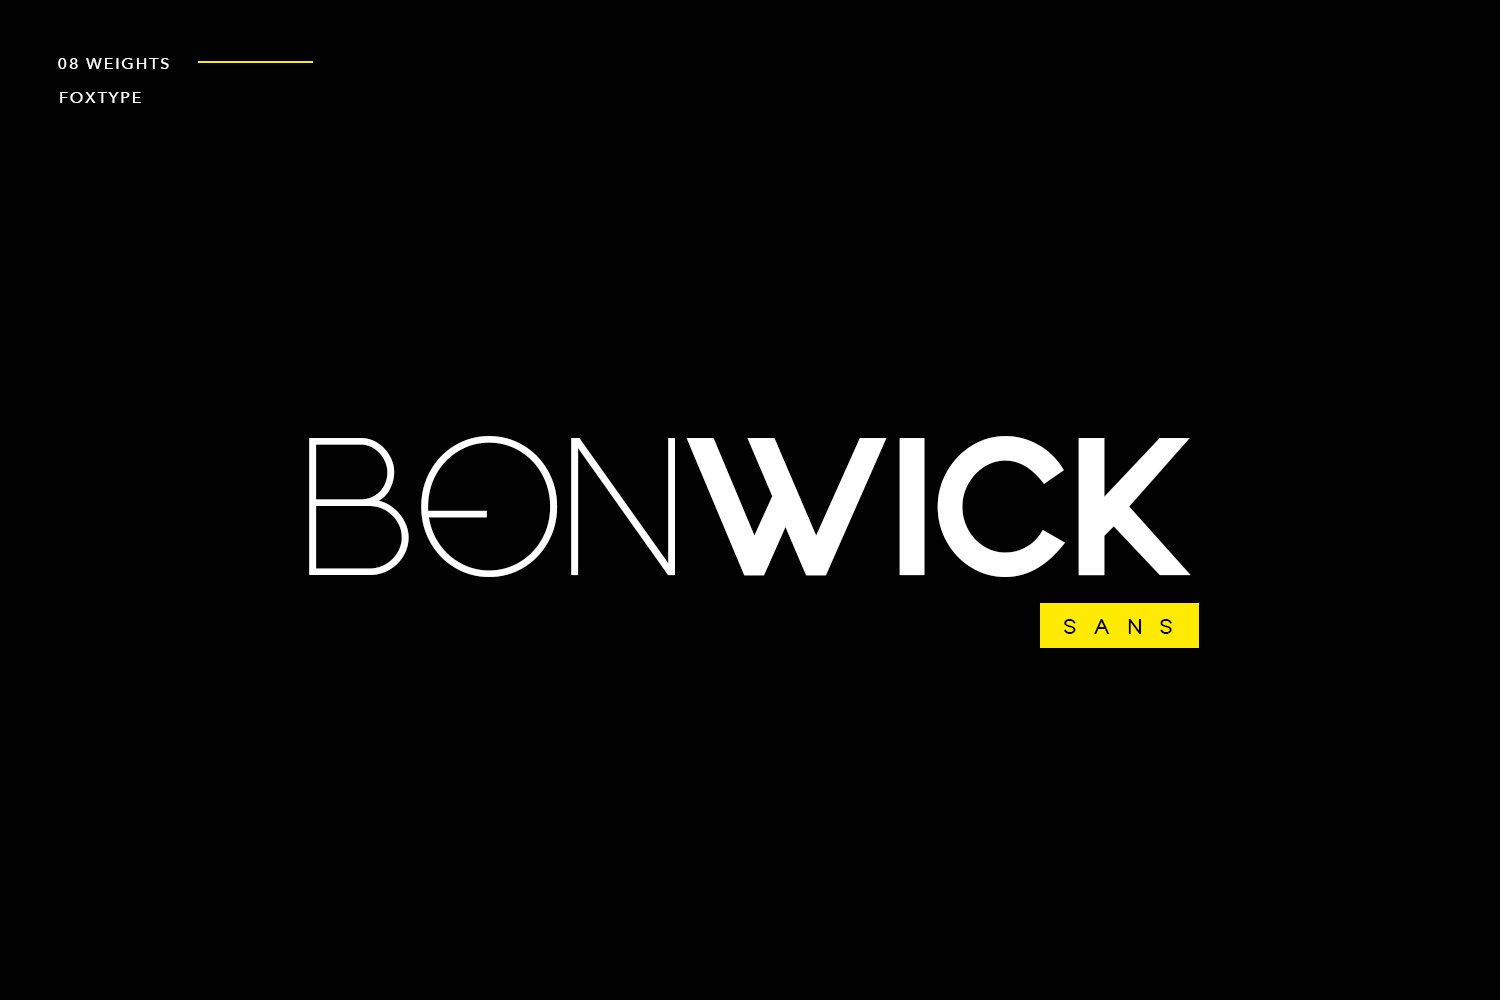 Bonwick Typeface cover image.